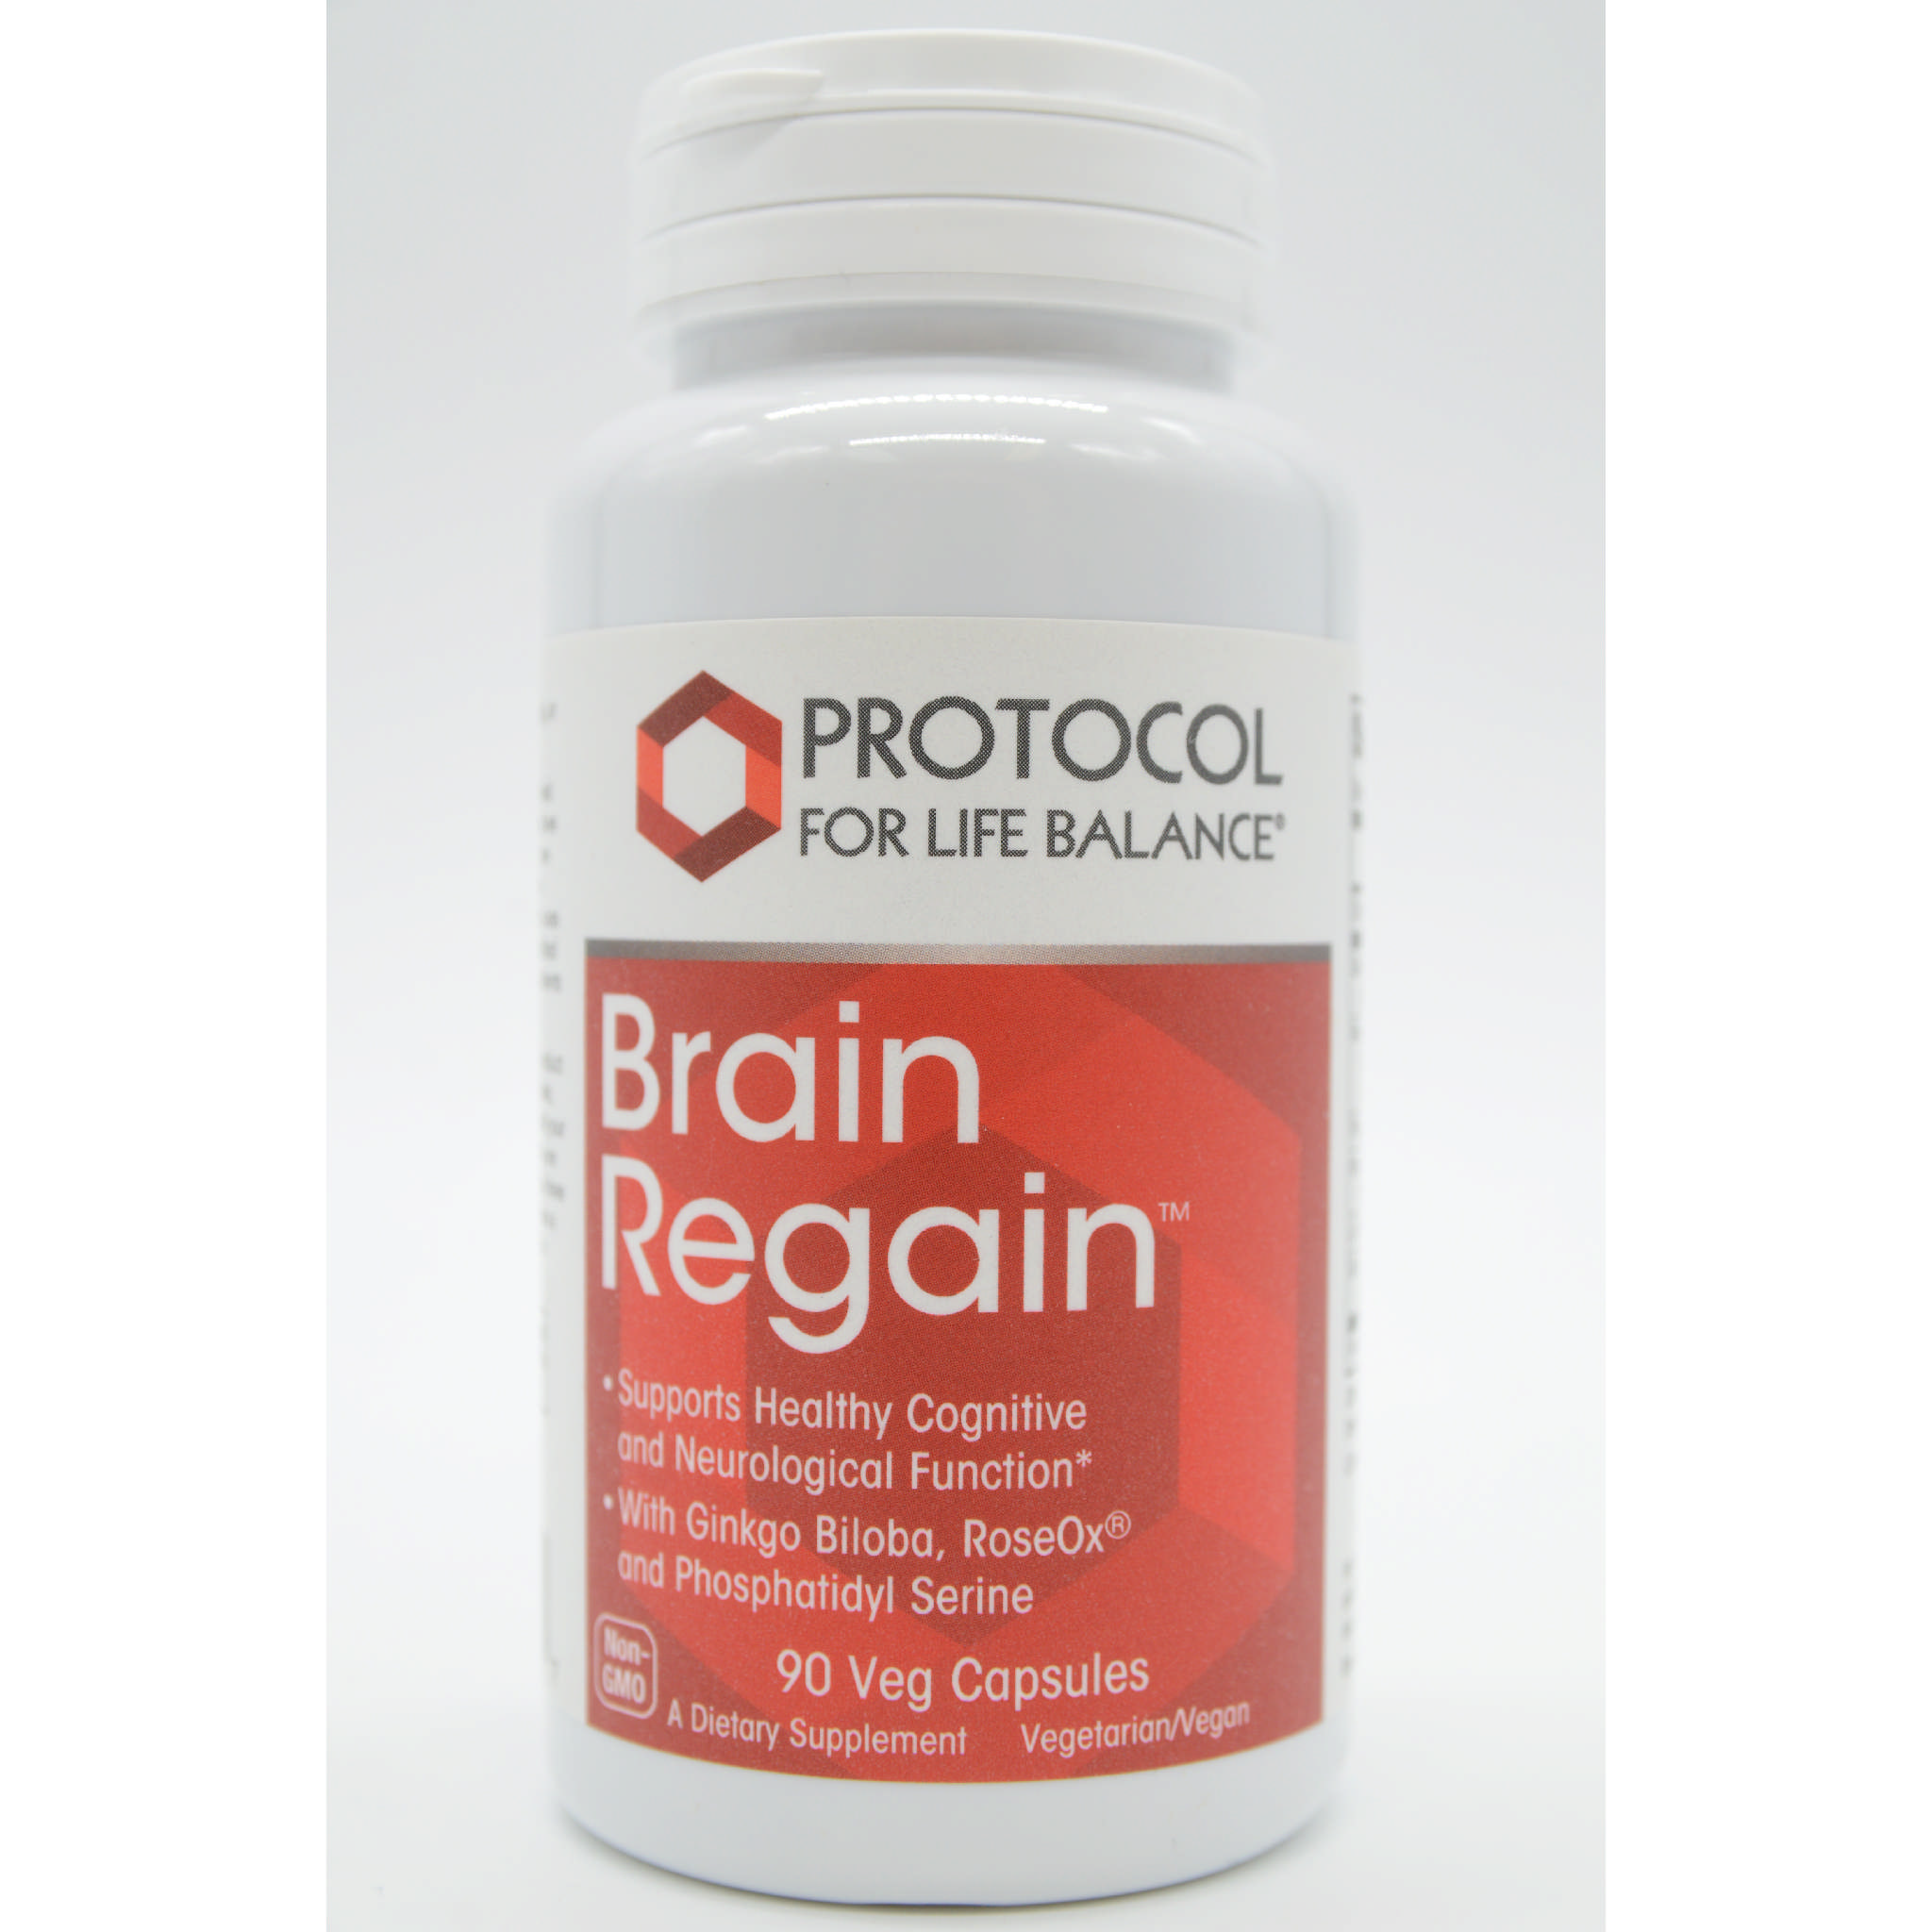 Protocol For Life Balance - Brain Regain